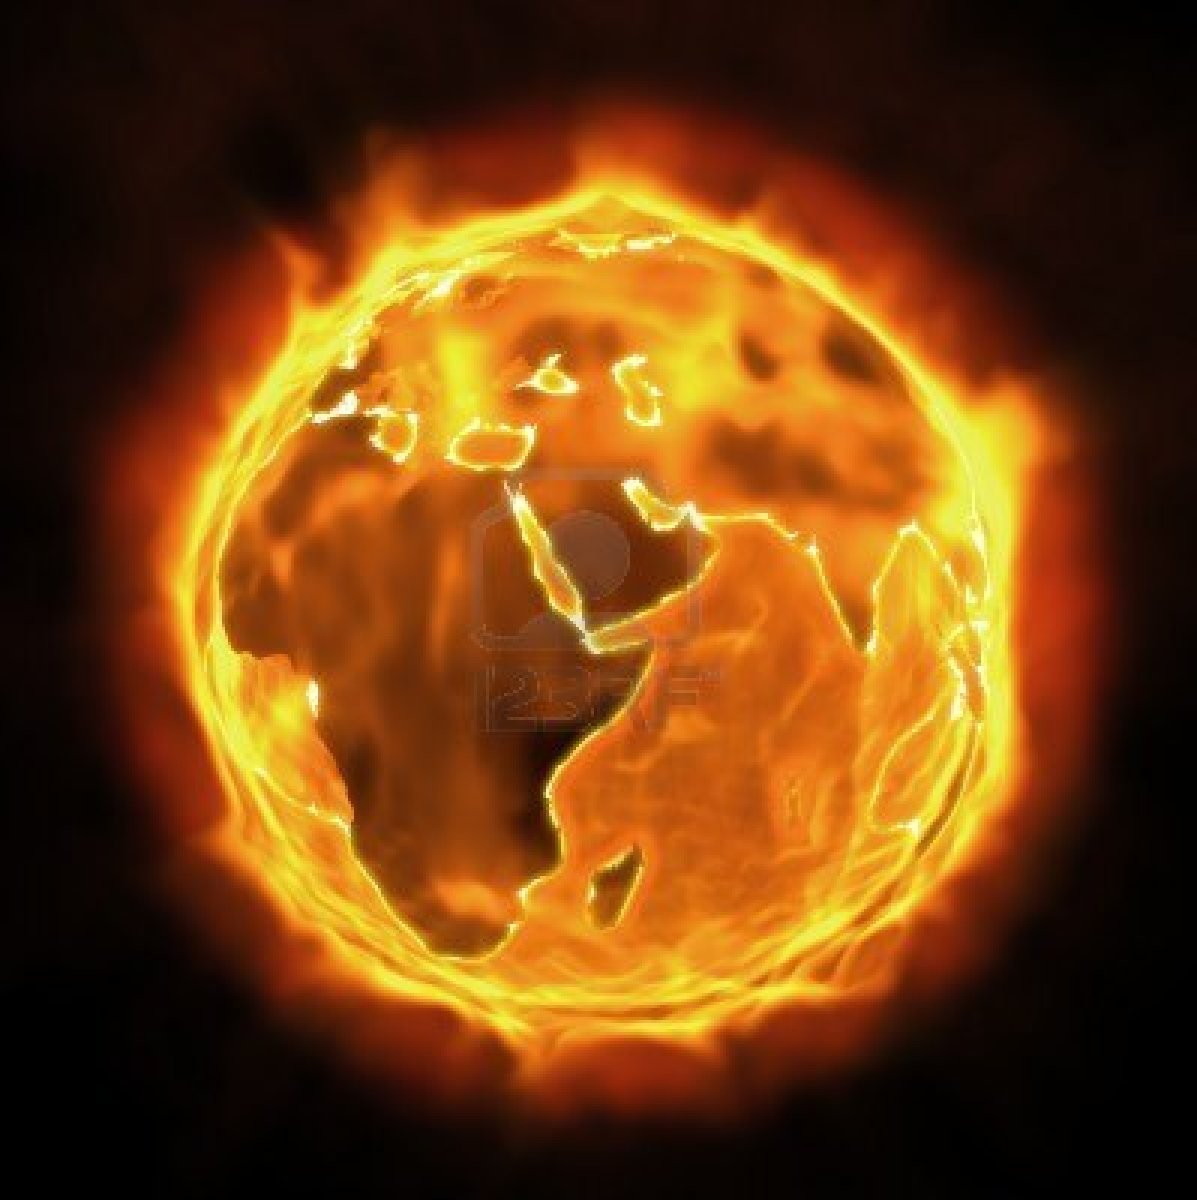 Burning Ice Planet (Gliese 436 b)